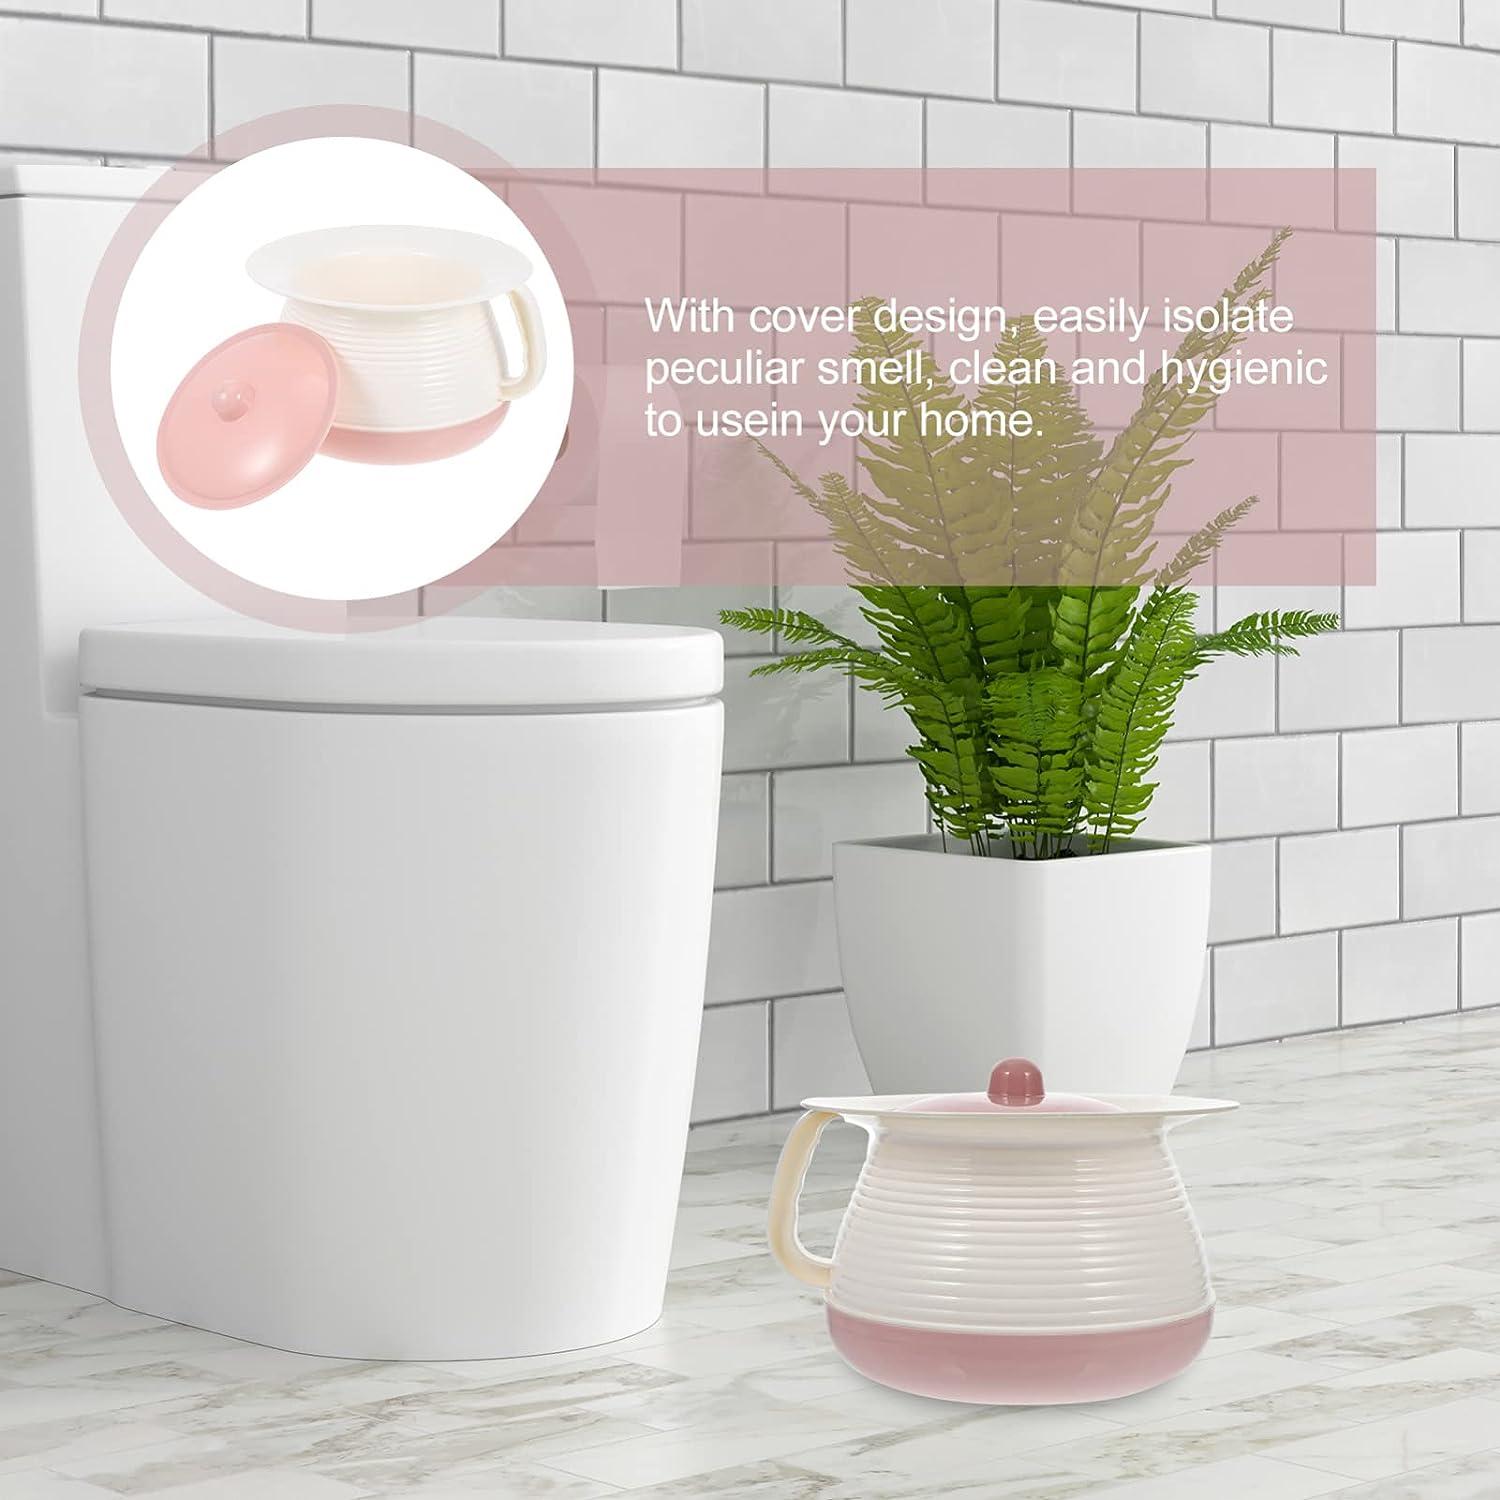 Chamber Pot Portable Toilet Urinal Bedpan Spittoon Chamber Pot